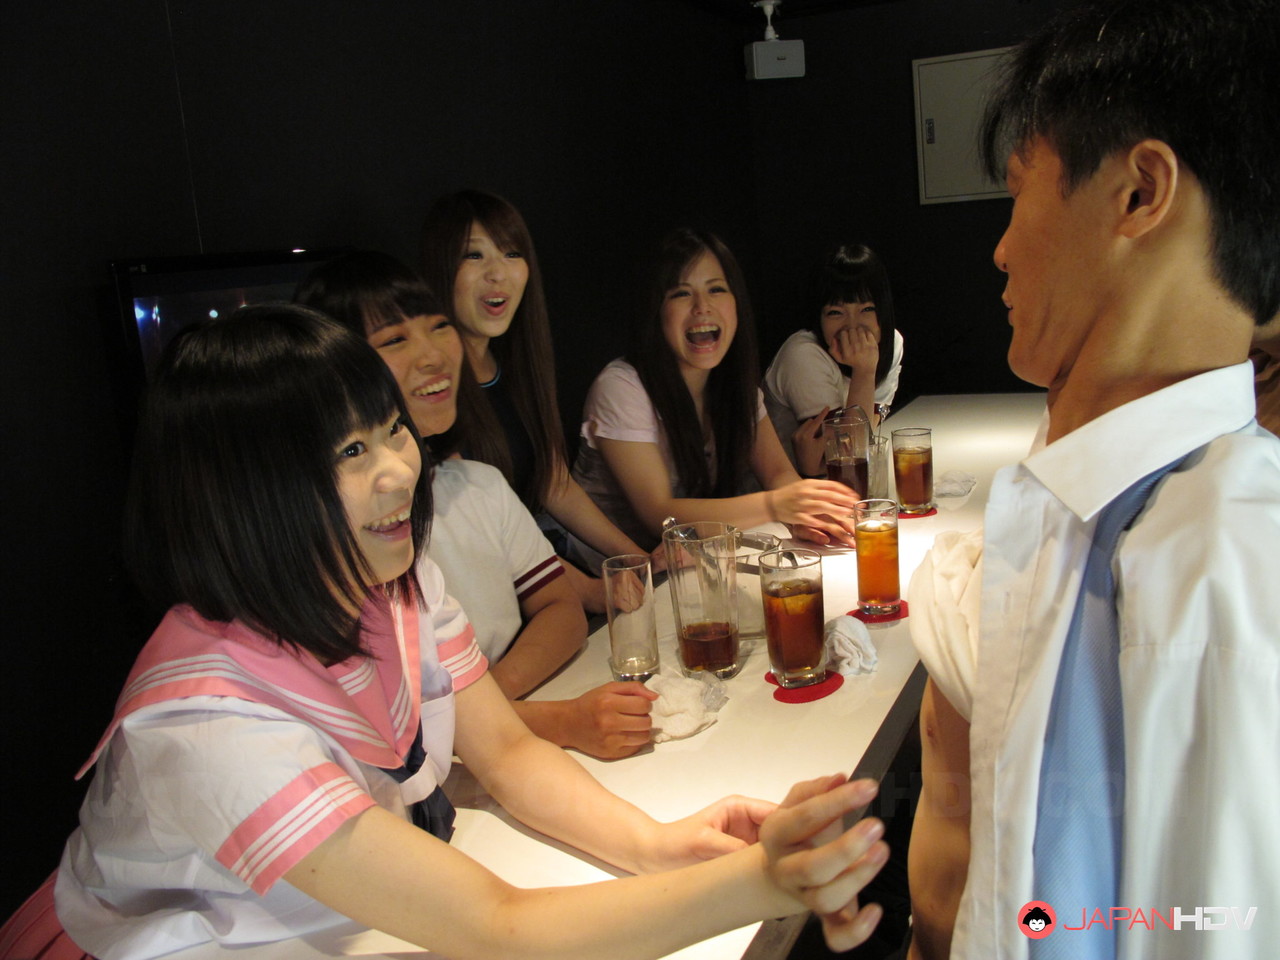 Asian cutie Mio Kosaki and her friends suck and jerk off dongs in a bar photo porno #426551978 | Japan HDV Pics, Mio Kosaki, Seiko Ida, Yuri Sakura, Japanese, porno mobile